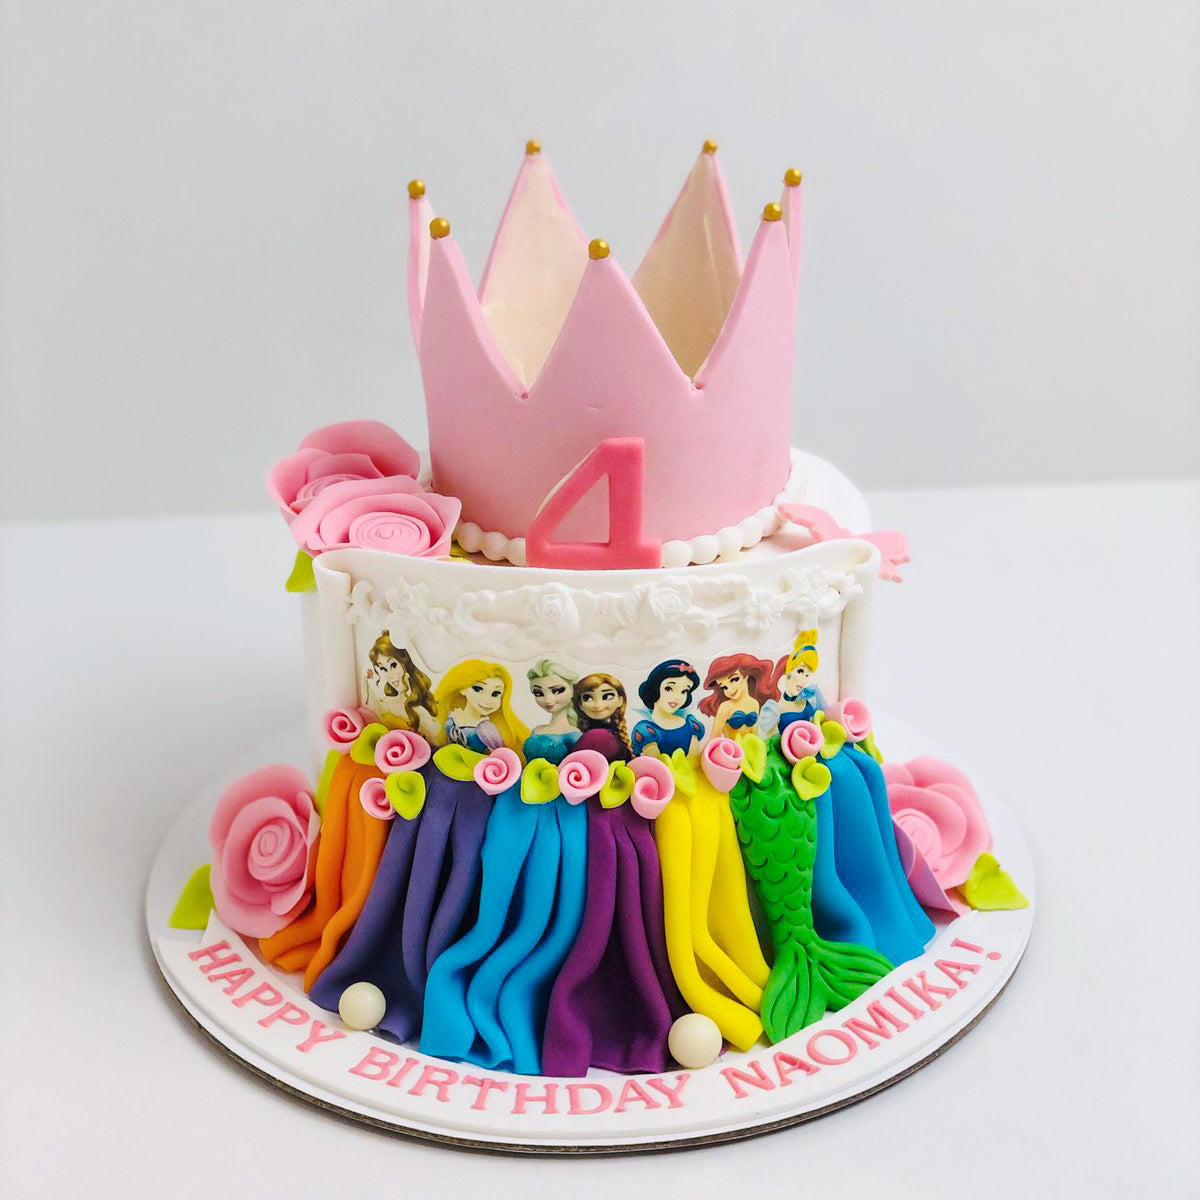 Paw Patrol 3rd birthday cake - Christine's Cakes | Facebook